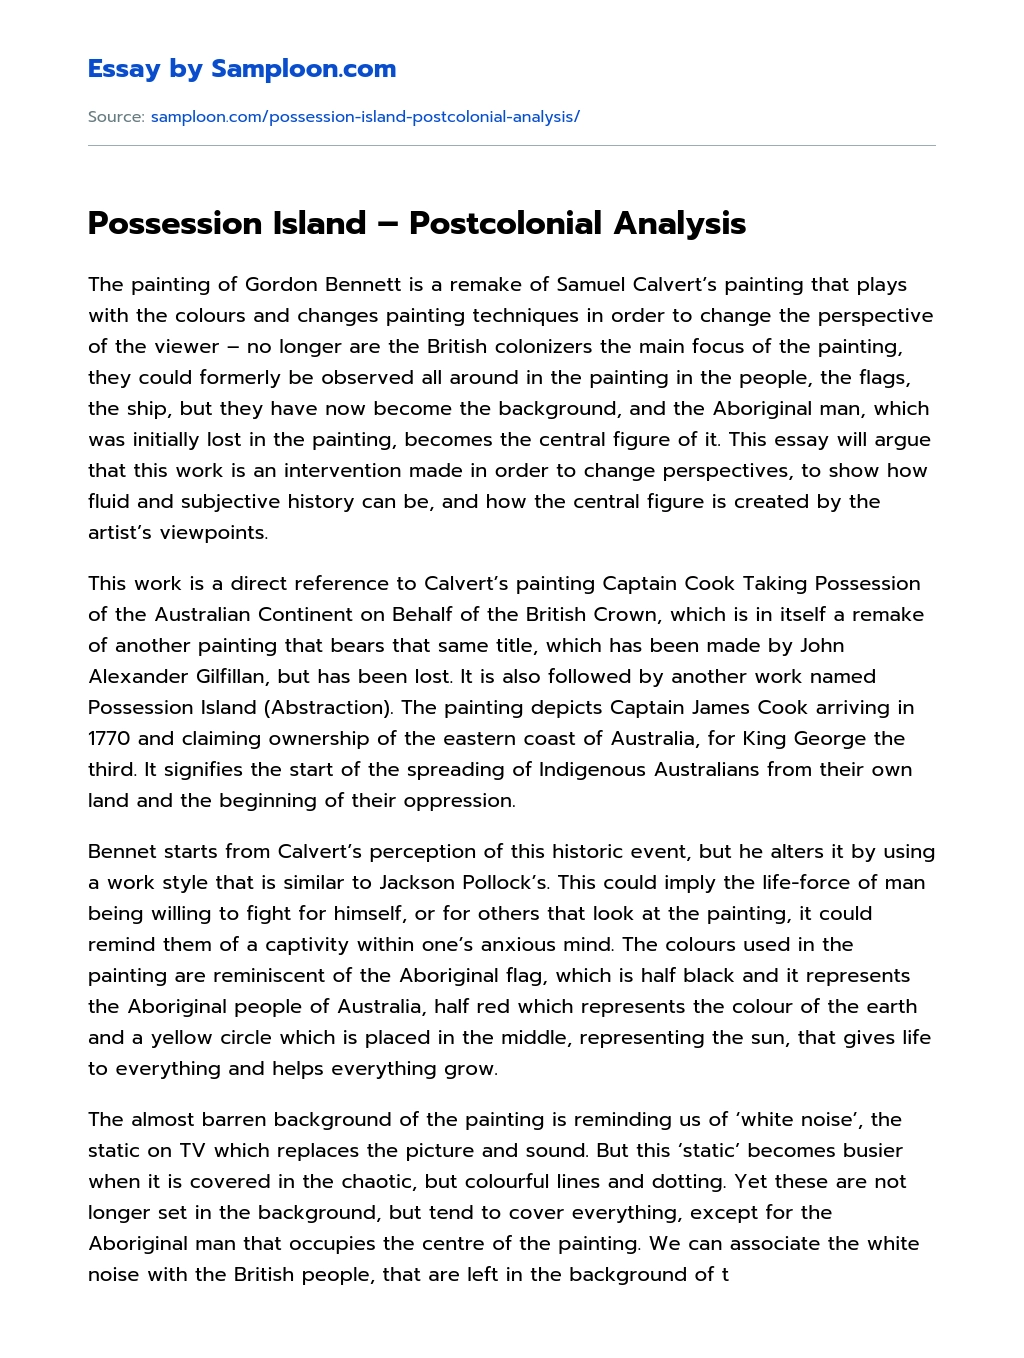 Possession Island – Postcolonial Analysis  essay